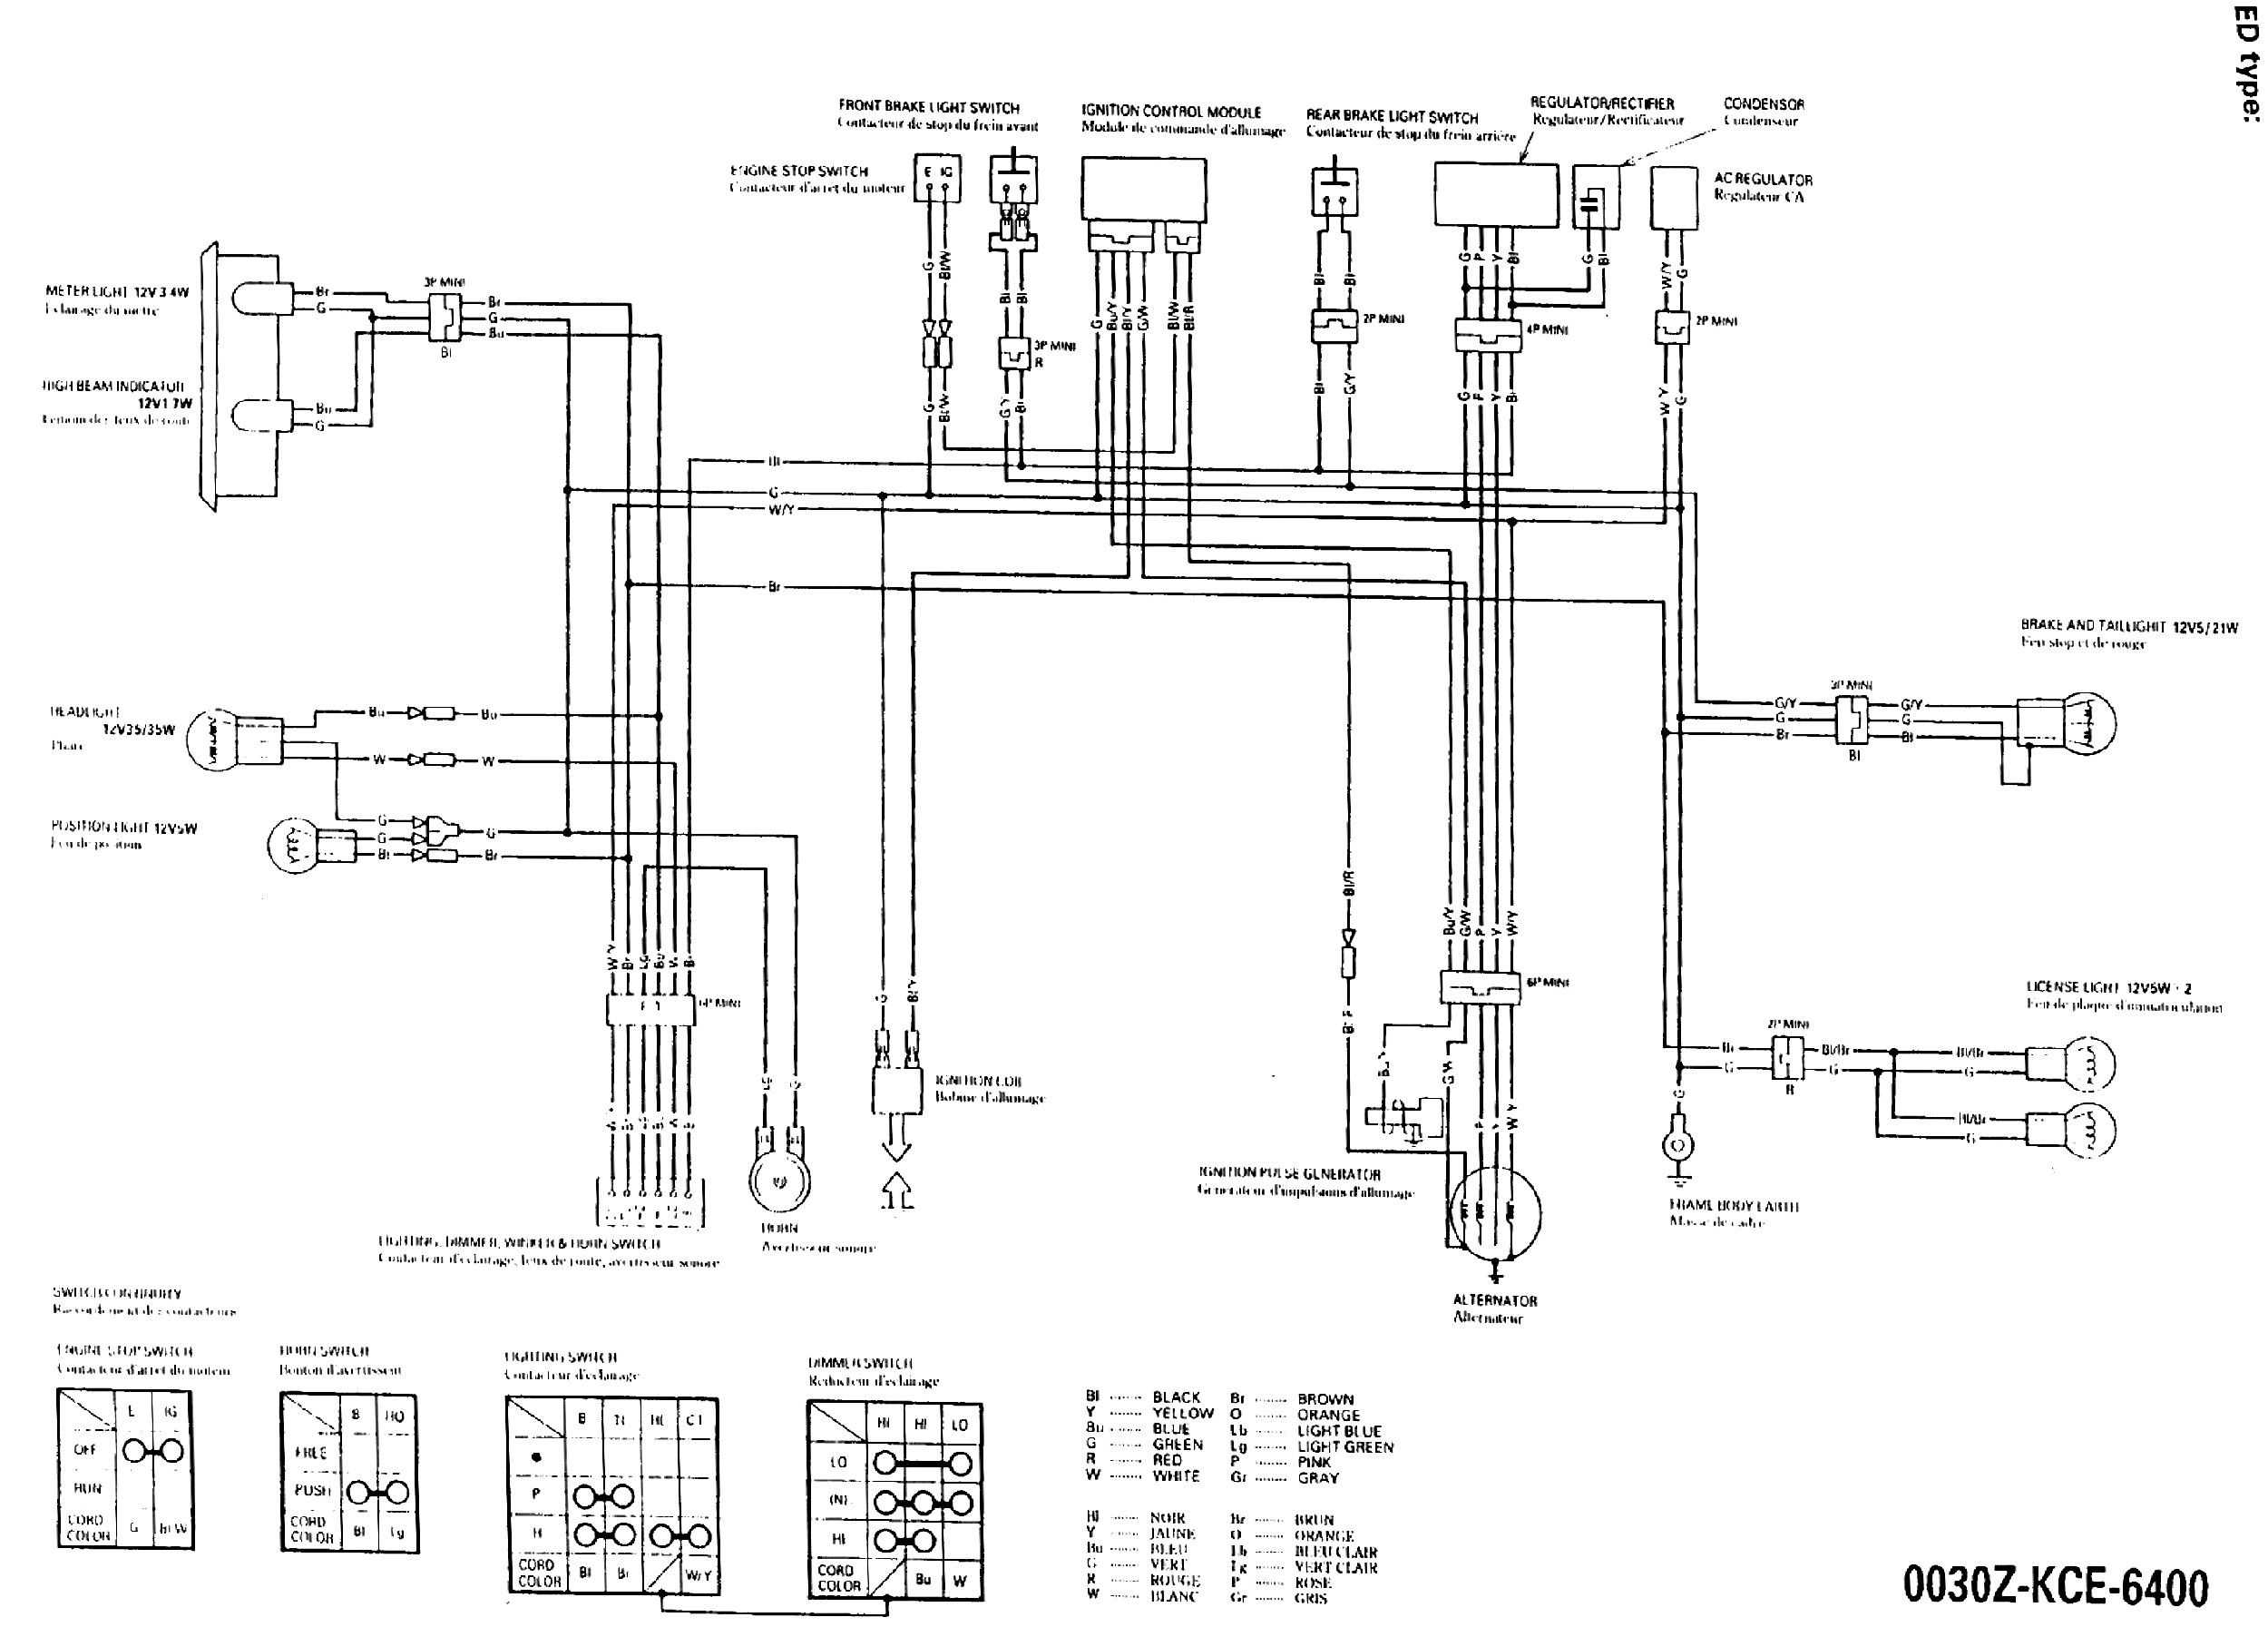 Honda Small Engine Diagram Honda Xr250r Wiring Diagram Honda Wiring Diagrams Instructions Of Honda Small Engine Diagram